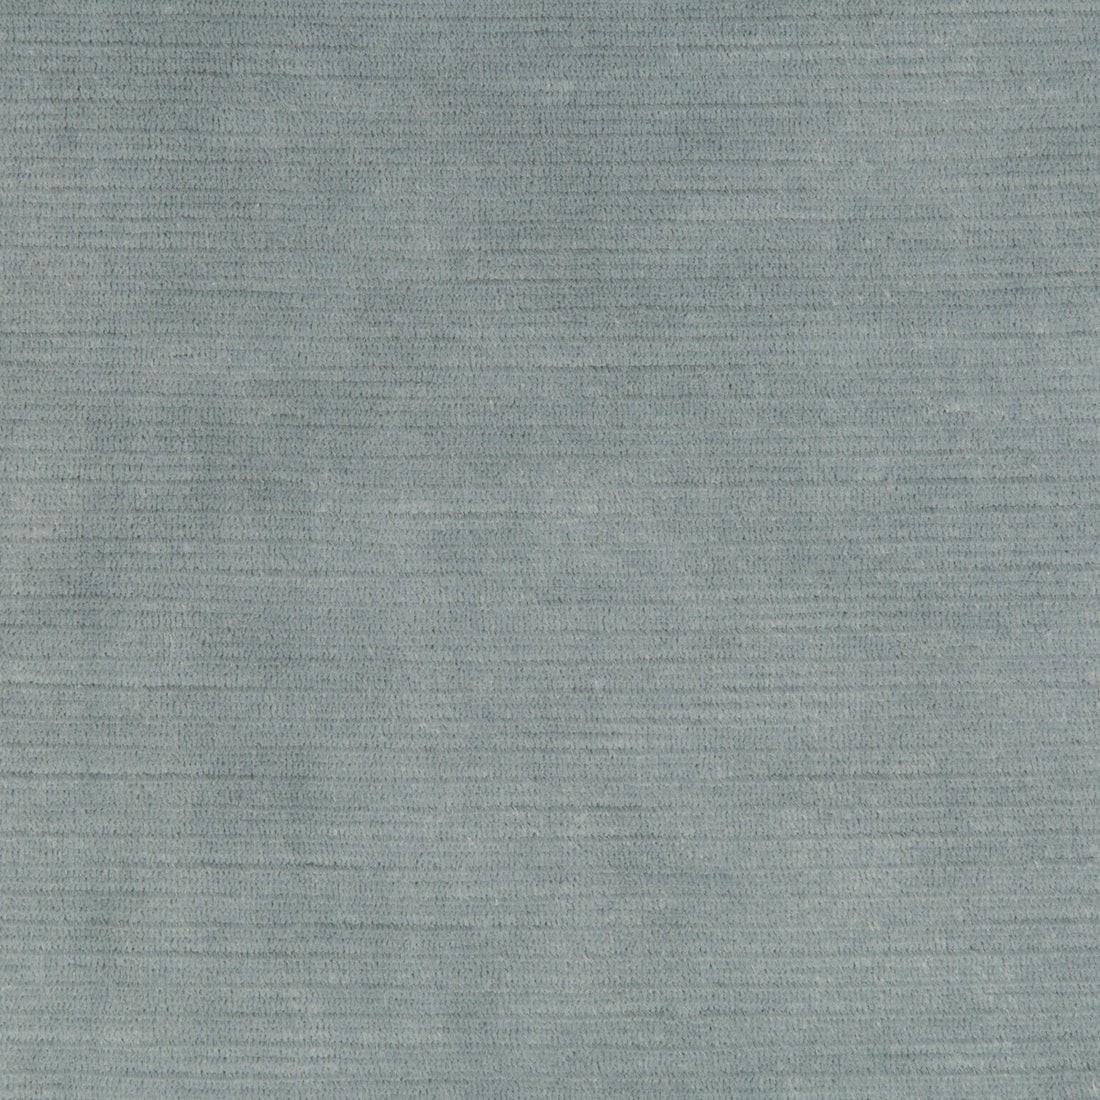 Gemma Velvet fabric in glacier color - pattern 2018148.115.0 - by Lee Jofa in the Gemma Performance Velvet collection